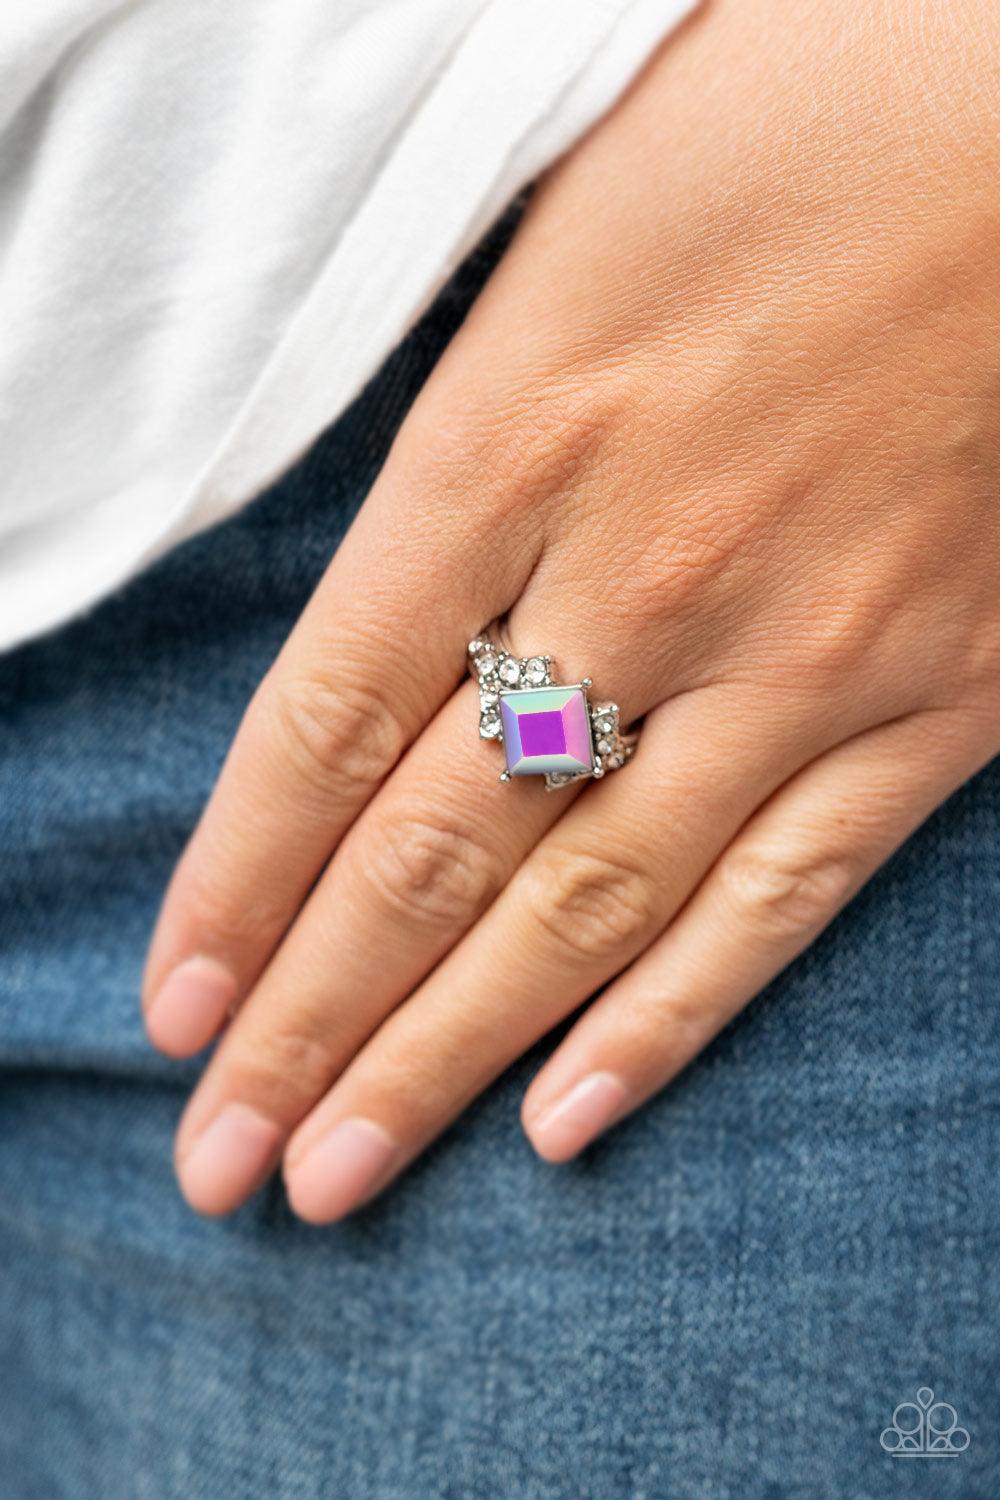 Mind-Blowing Brilliance Purple Ring - Jewelry by Bretta